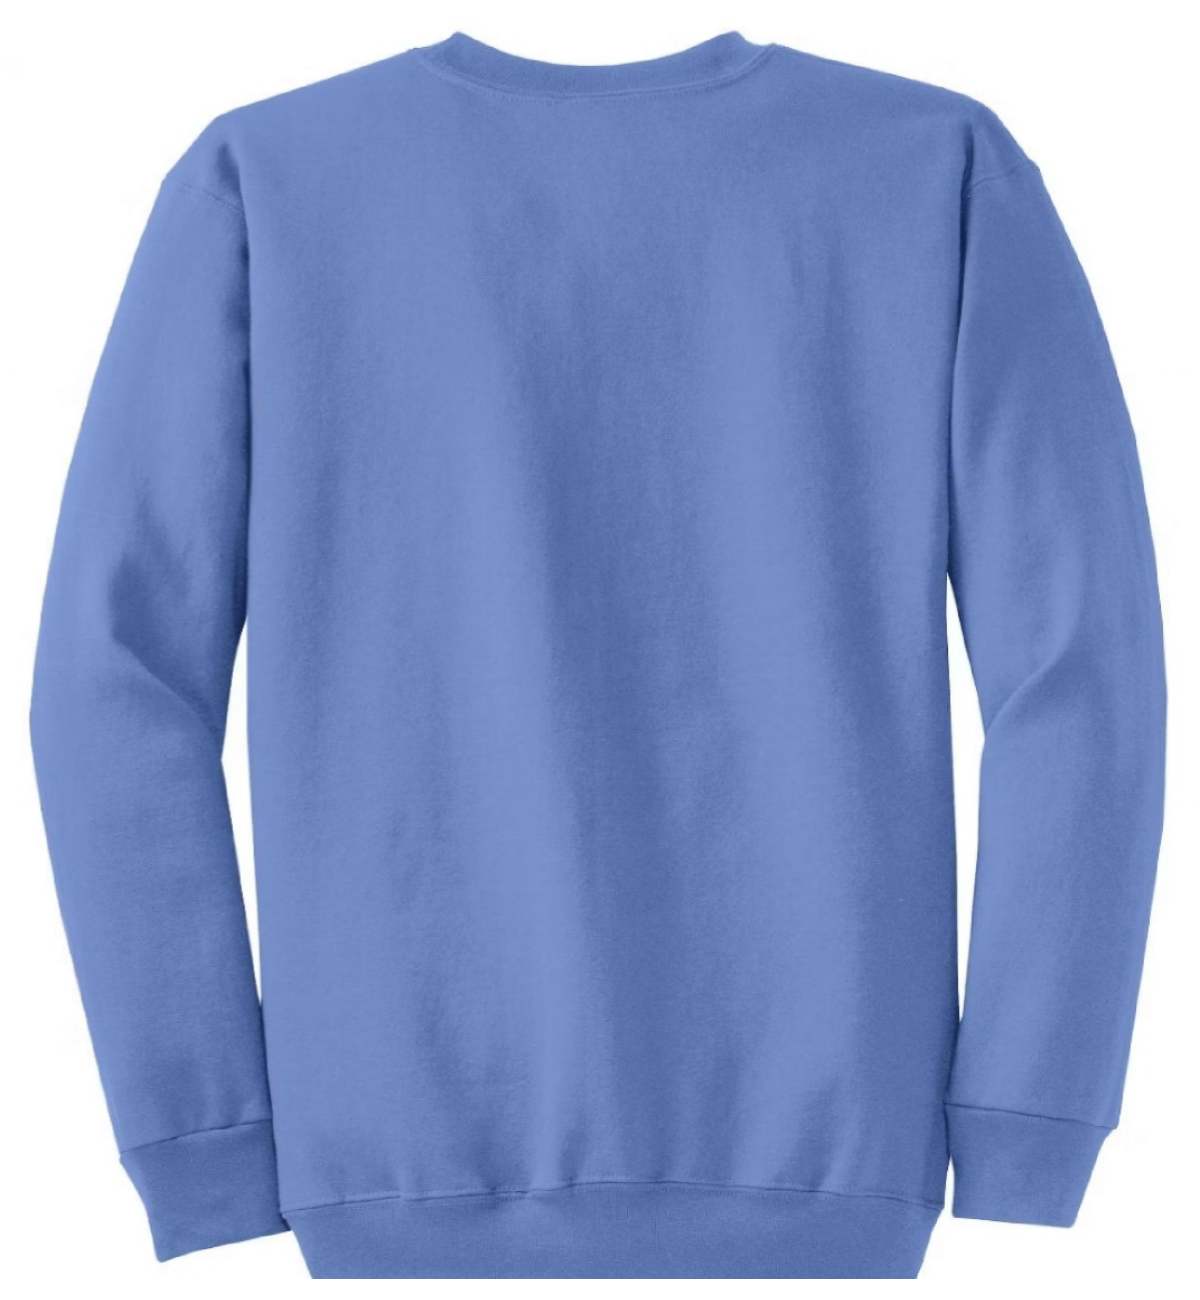 Masterpiece and work in progress sweatshirt – MONIGO'S VIBRANT DESIGNS